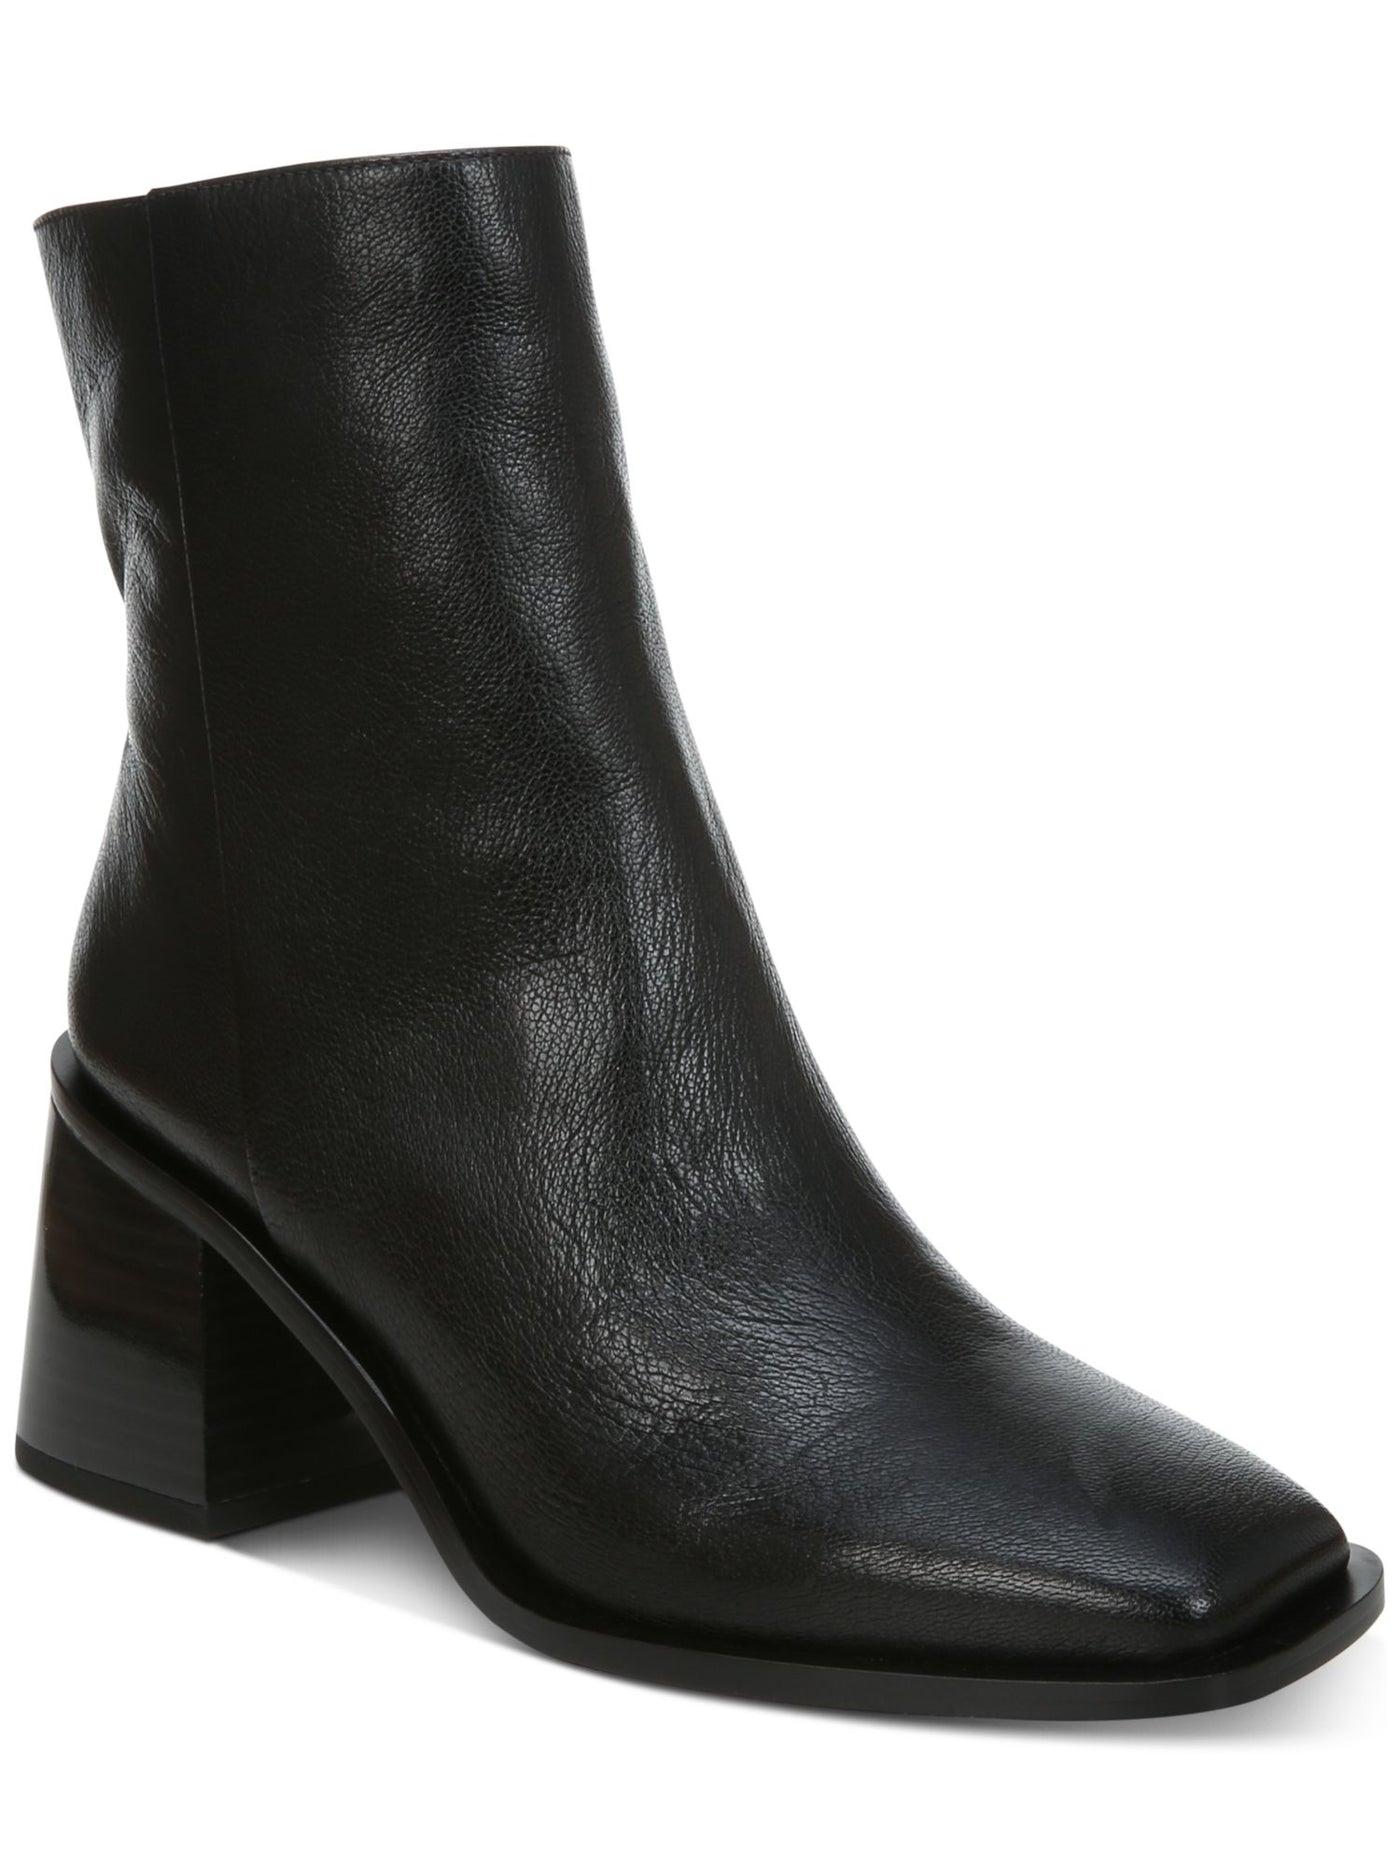 SAM EDELMAN NEW YORK Womens Black Winnie Square Toe Block Heel Zip-Up Leather Booties 6.5 M